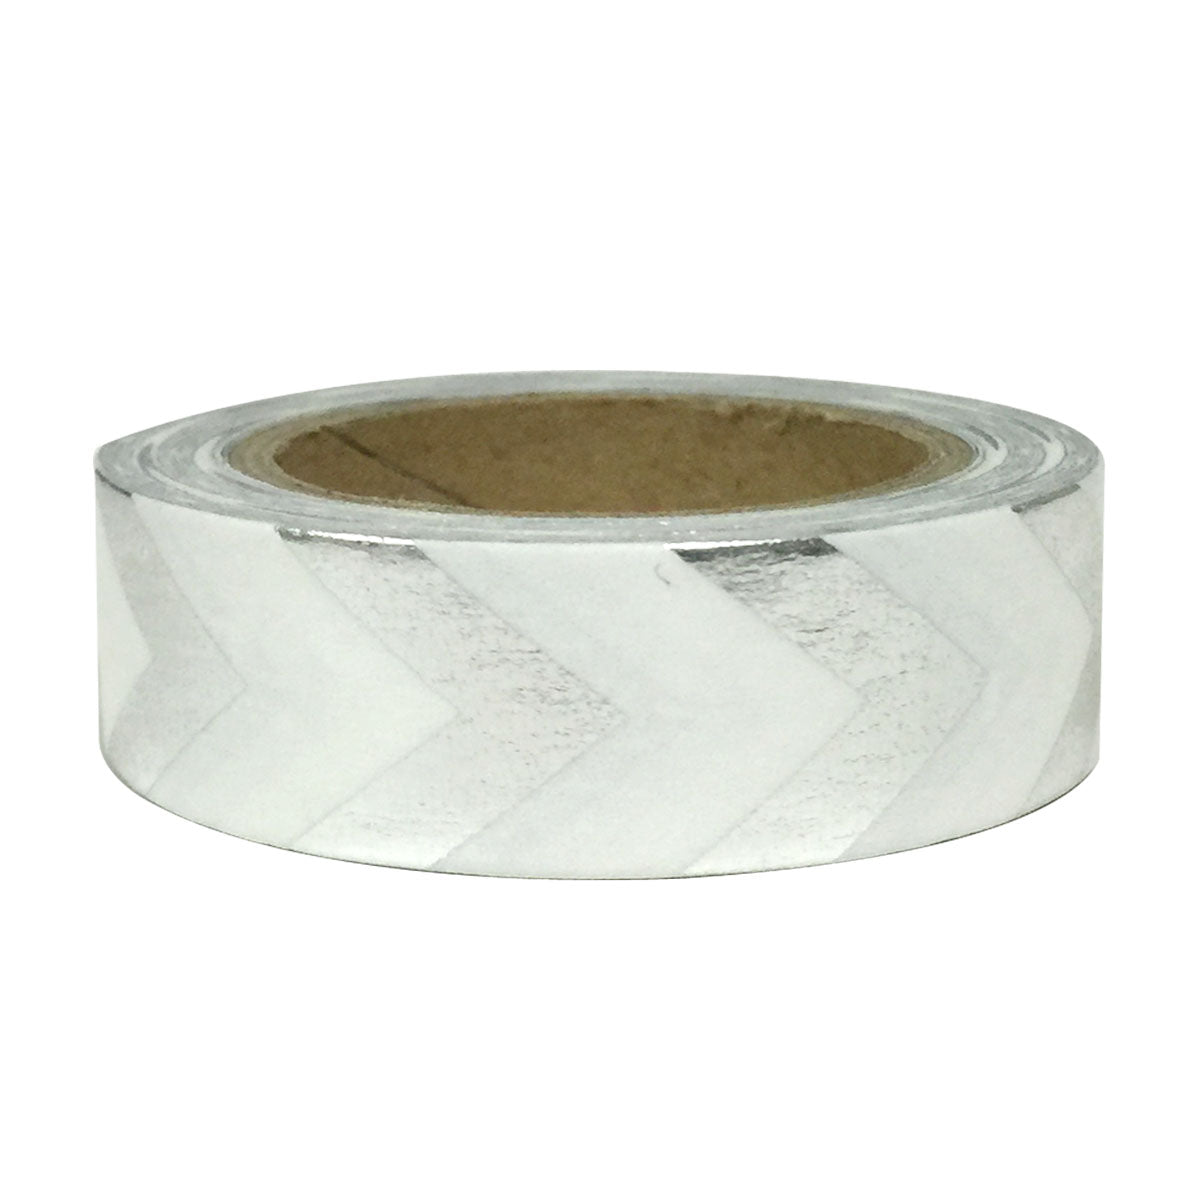 Wrapables Washi Masking Tape, Metallic and Moody Group